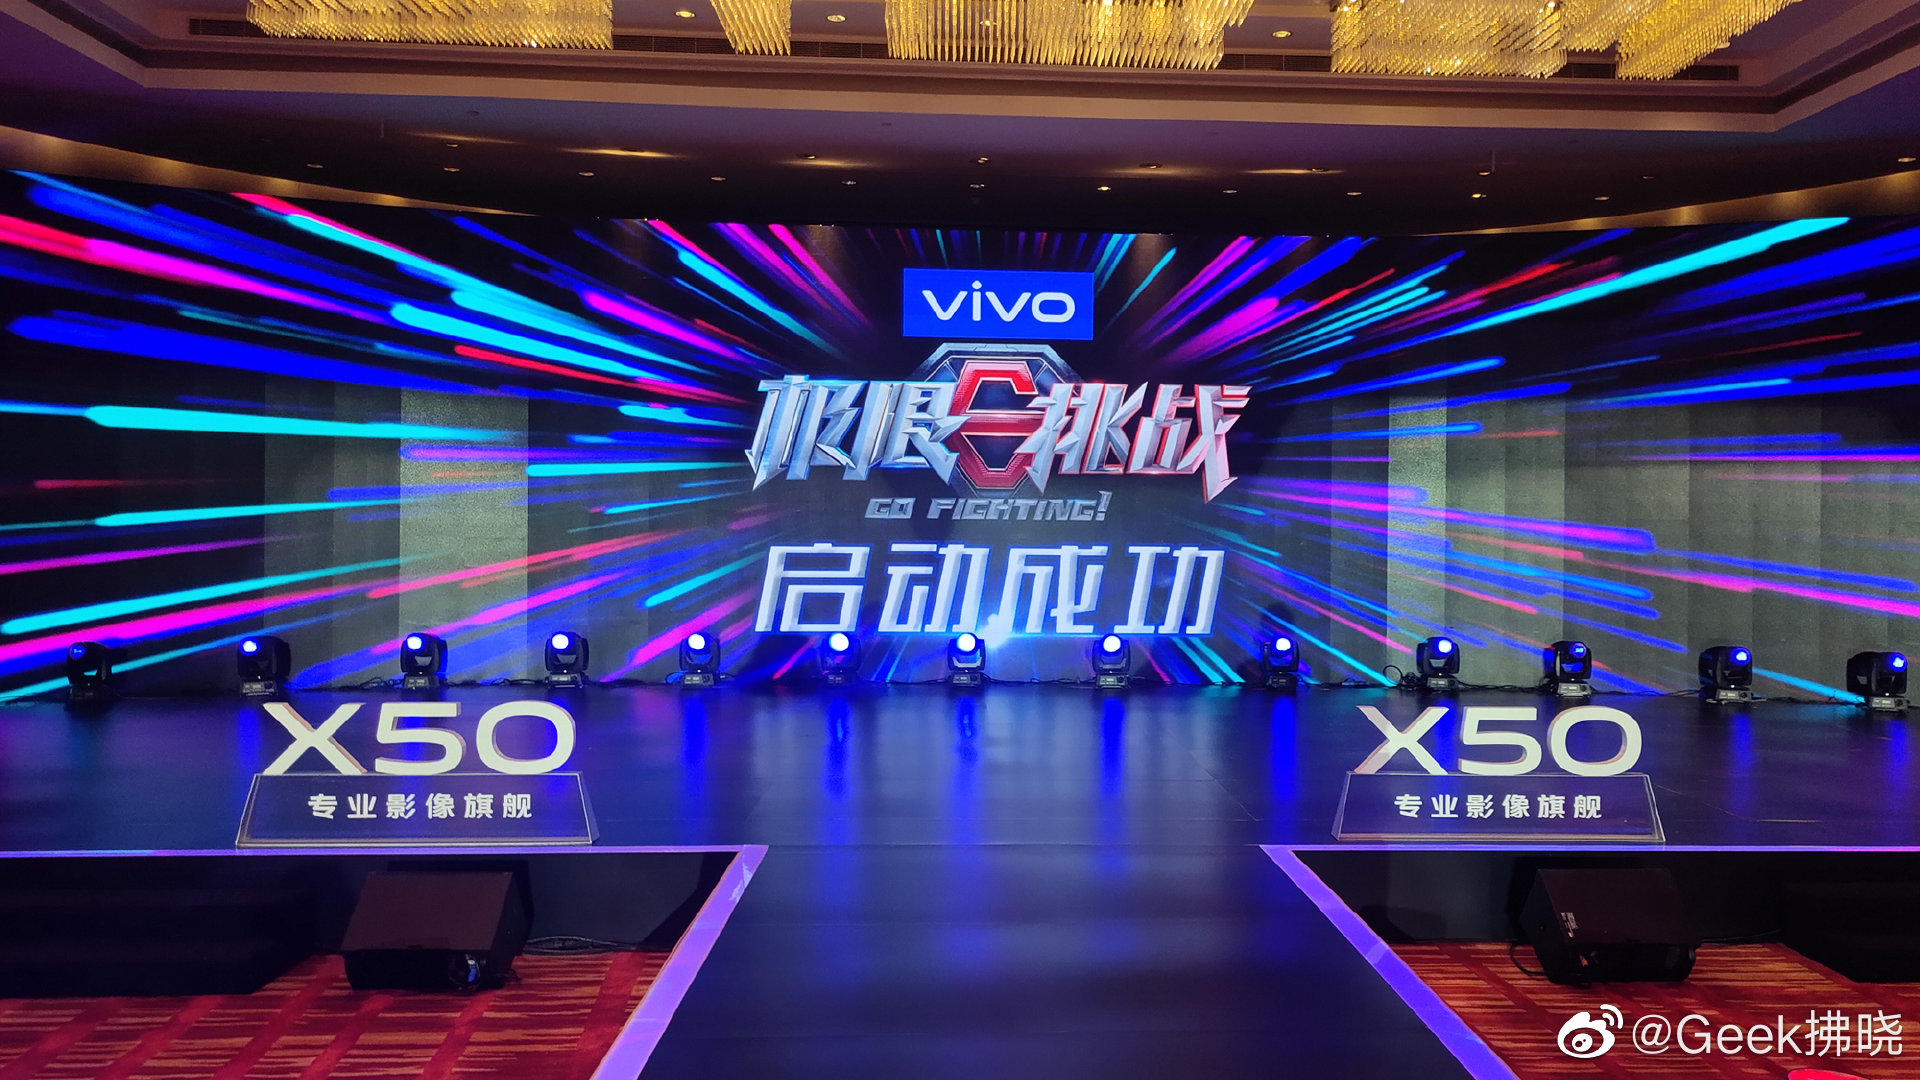 Vivo X50 name revealed